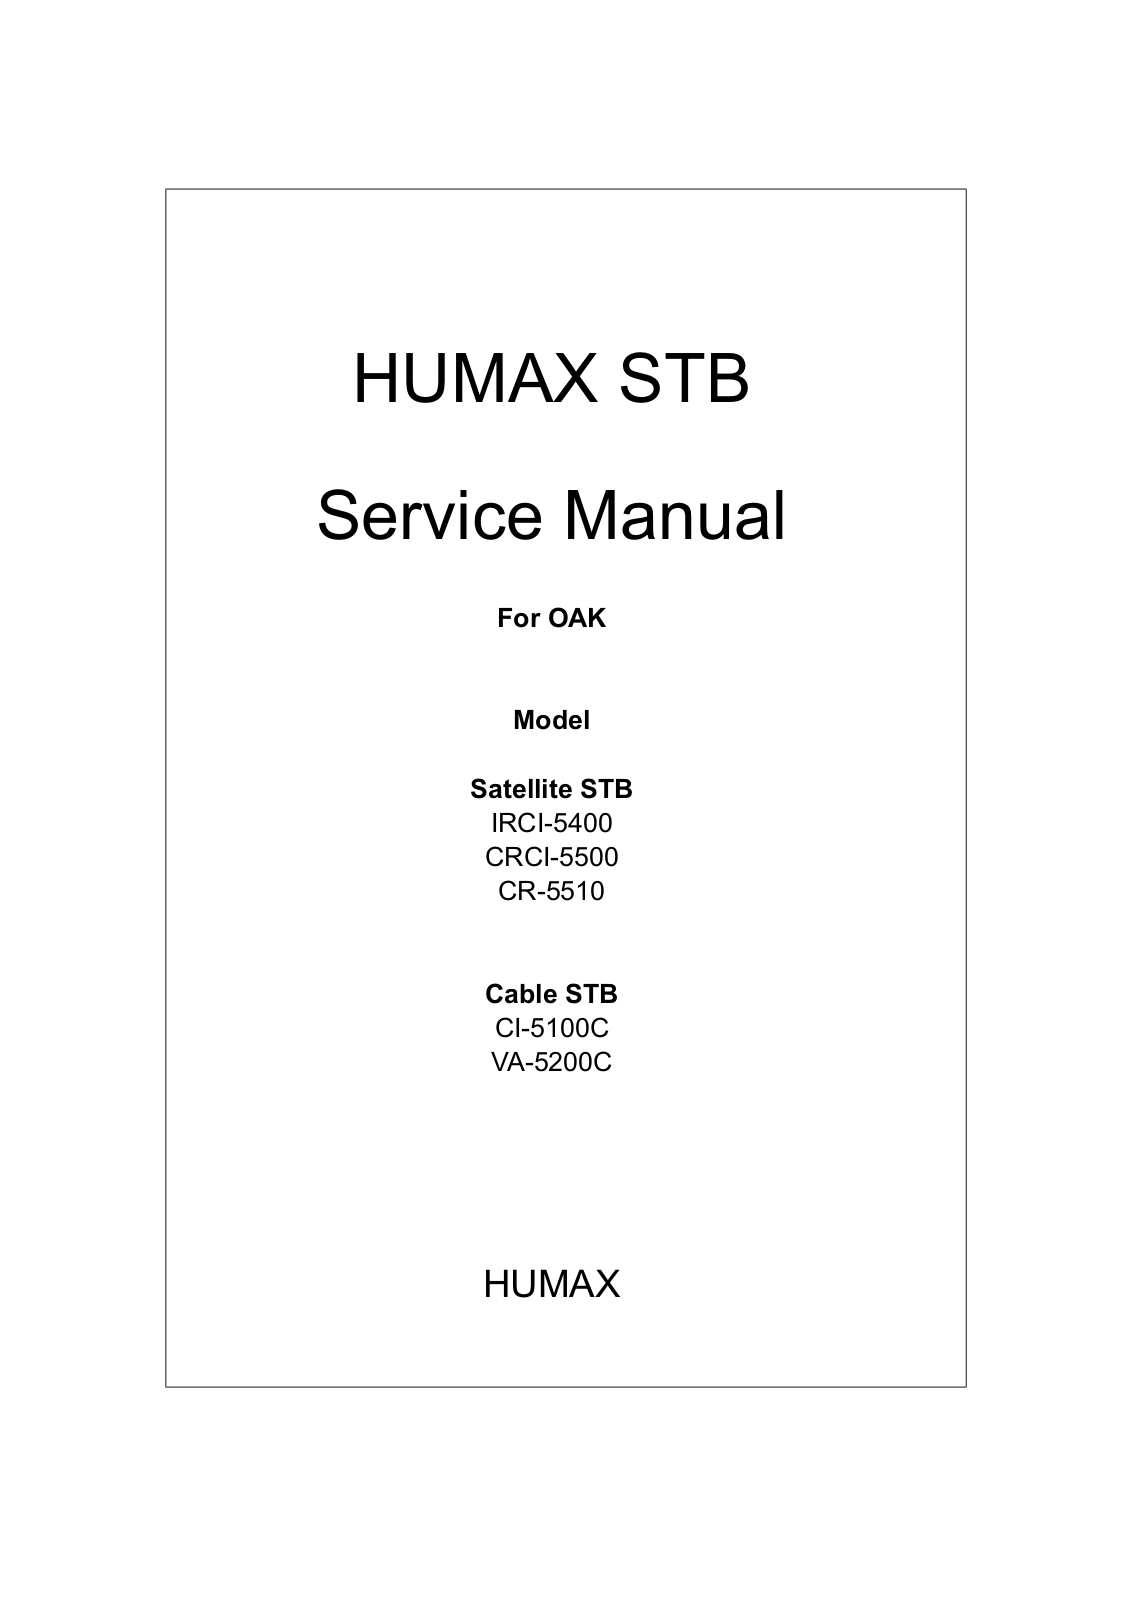 Humax VA-5200C, CI5100C, CR-5510, CRCI-5500, IRCI-5400 Service Manual